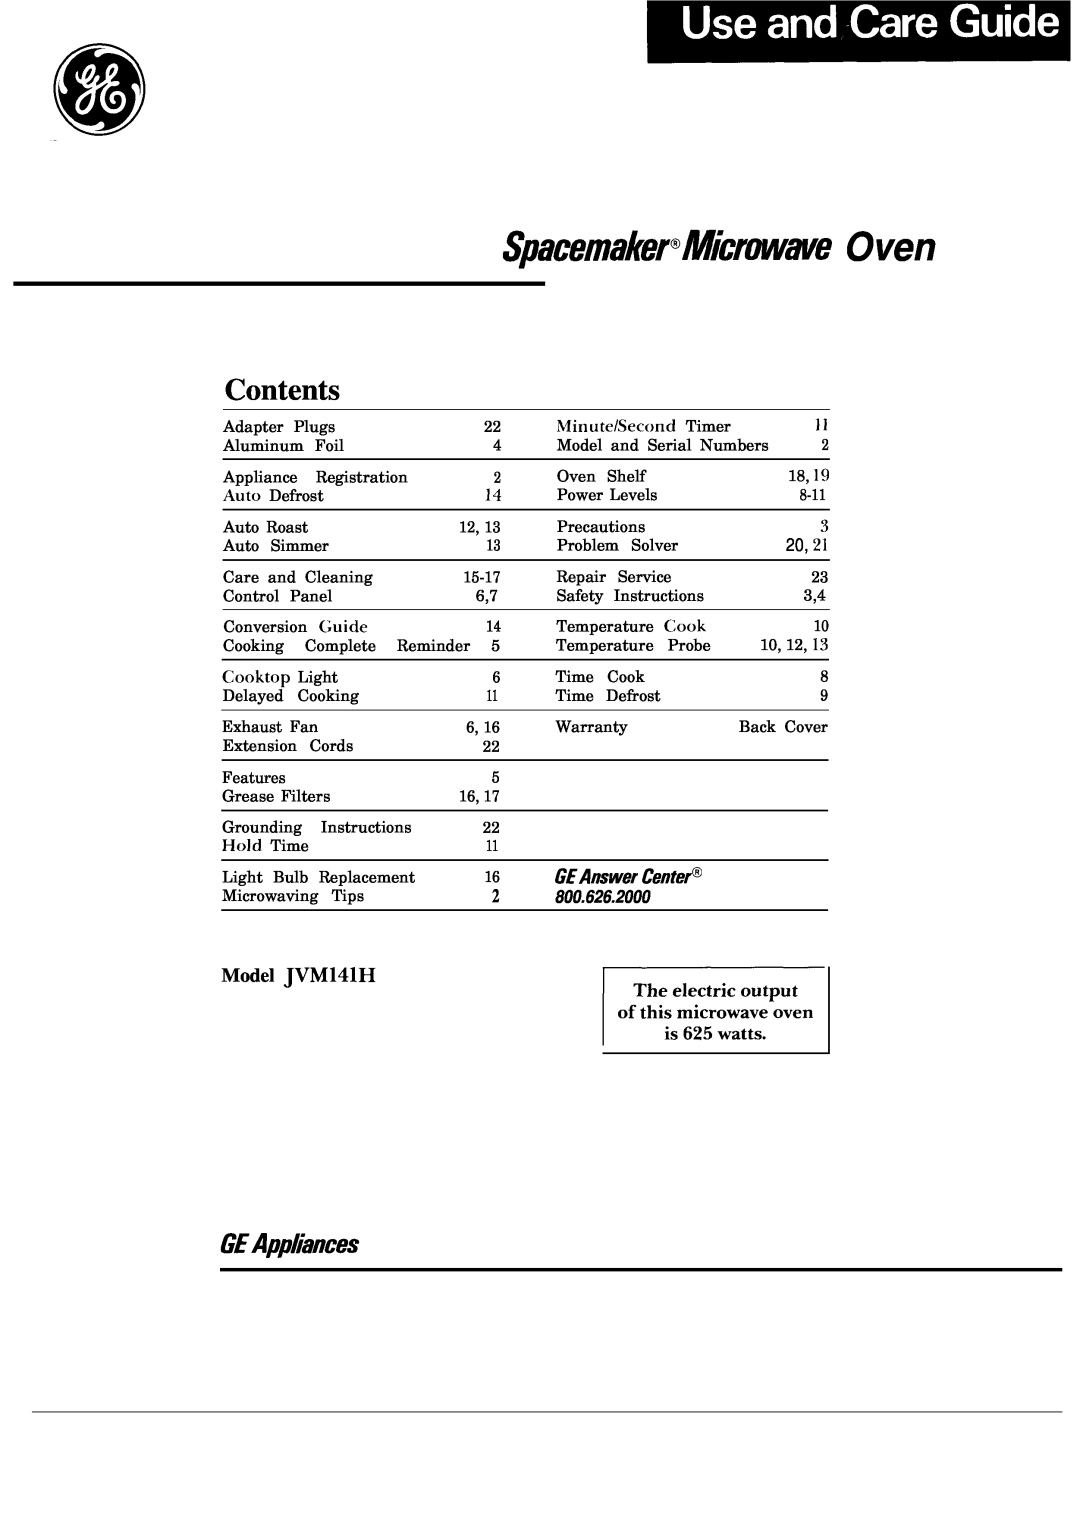 GE JVM141H warranty Contents, GEAppiances, Spacemaker@Micrwave Oven, GEAnswer Center@, 800.626.2000 